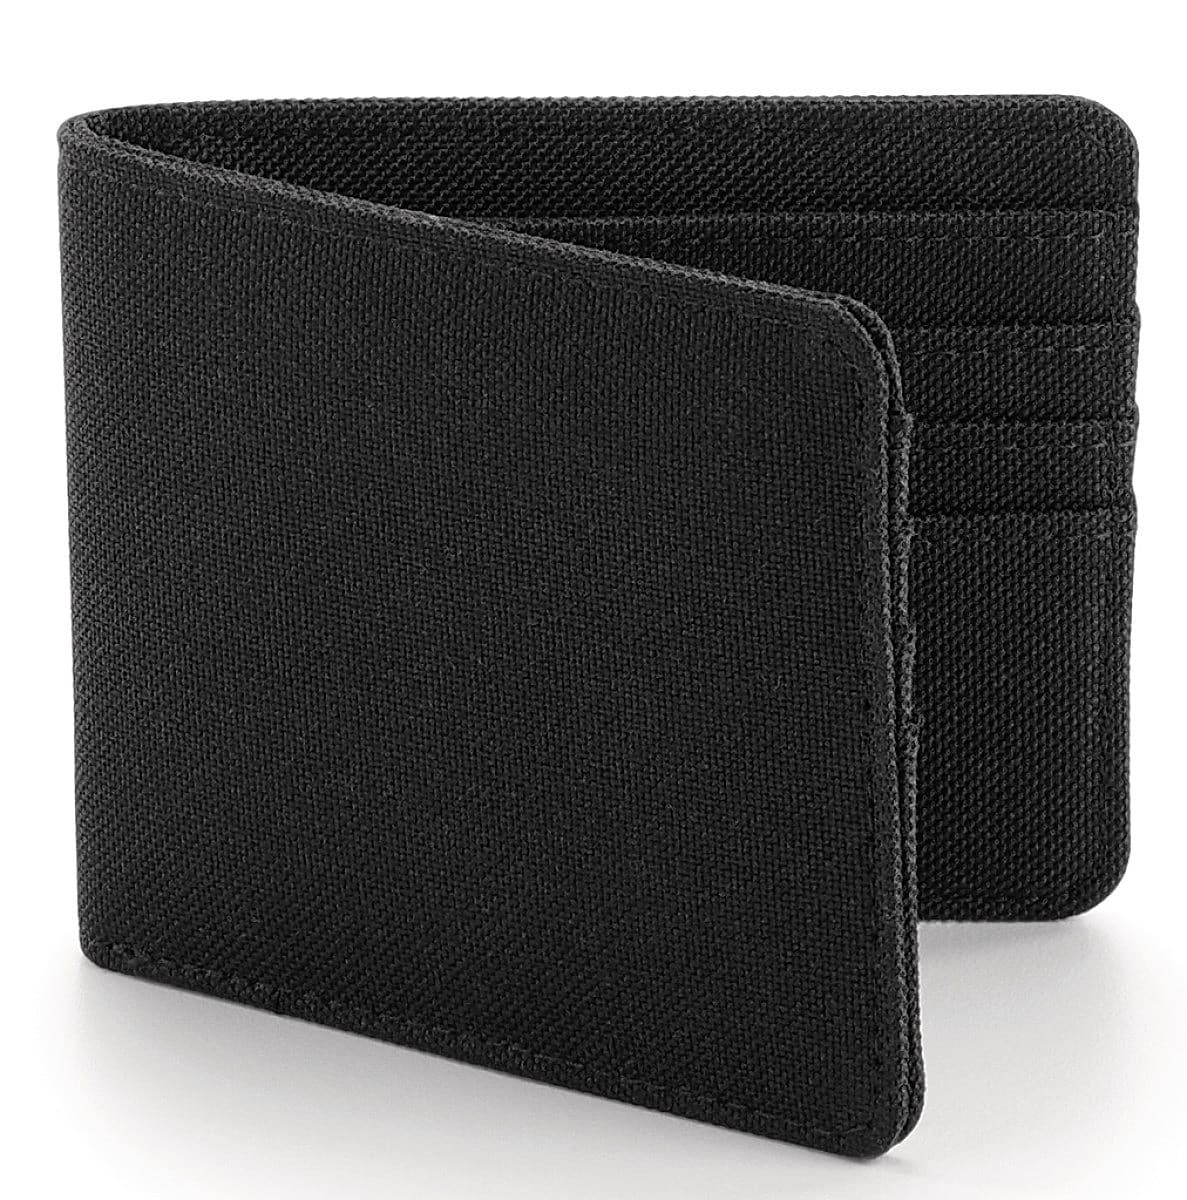 Bagbase Essential Card Wallet in Black (Product Code: BG58)